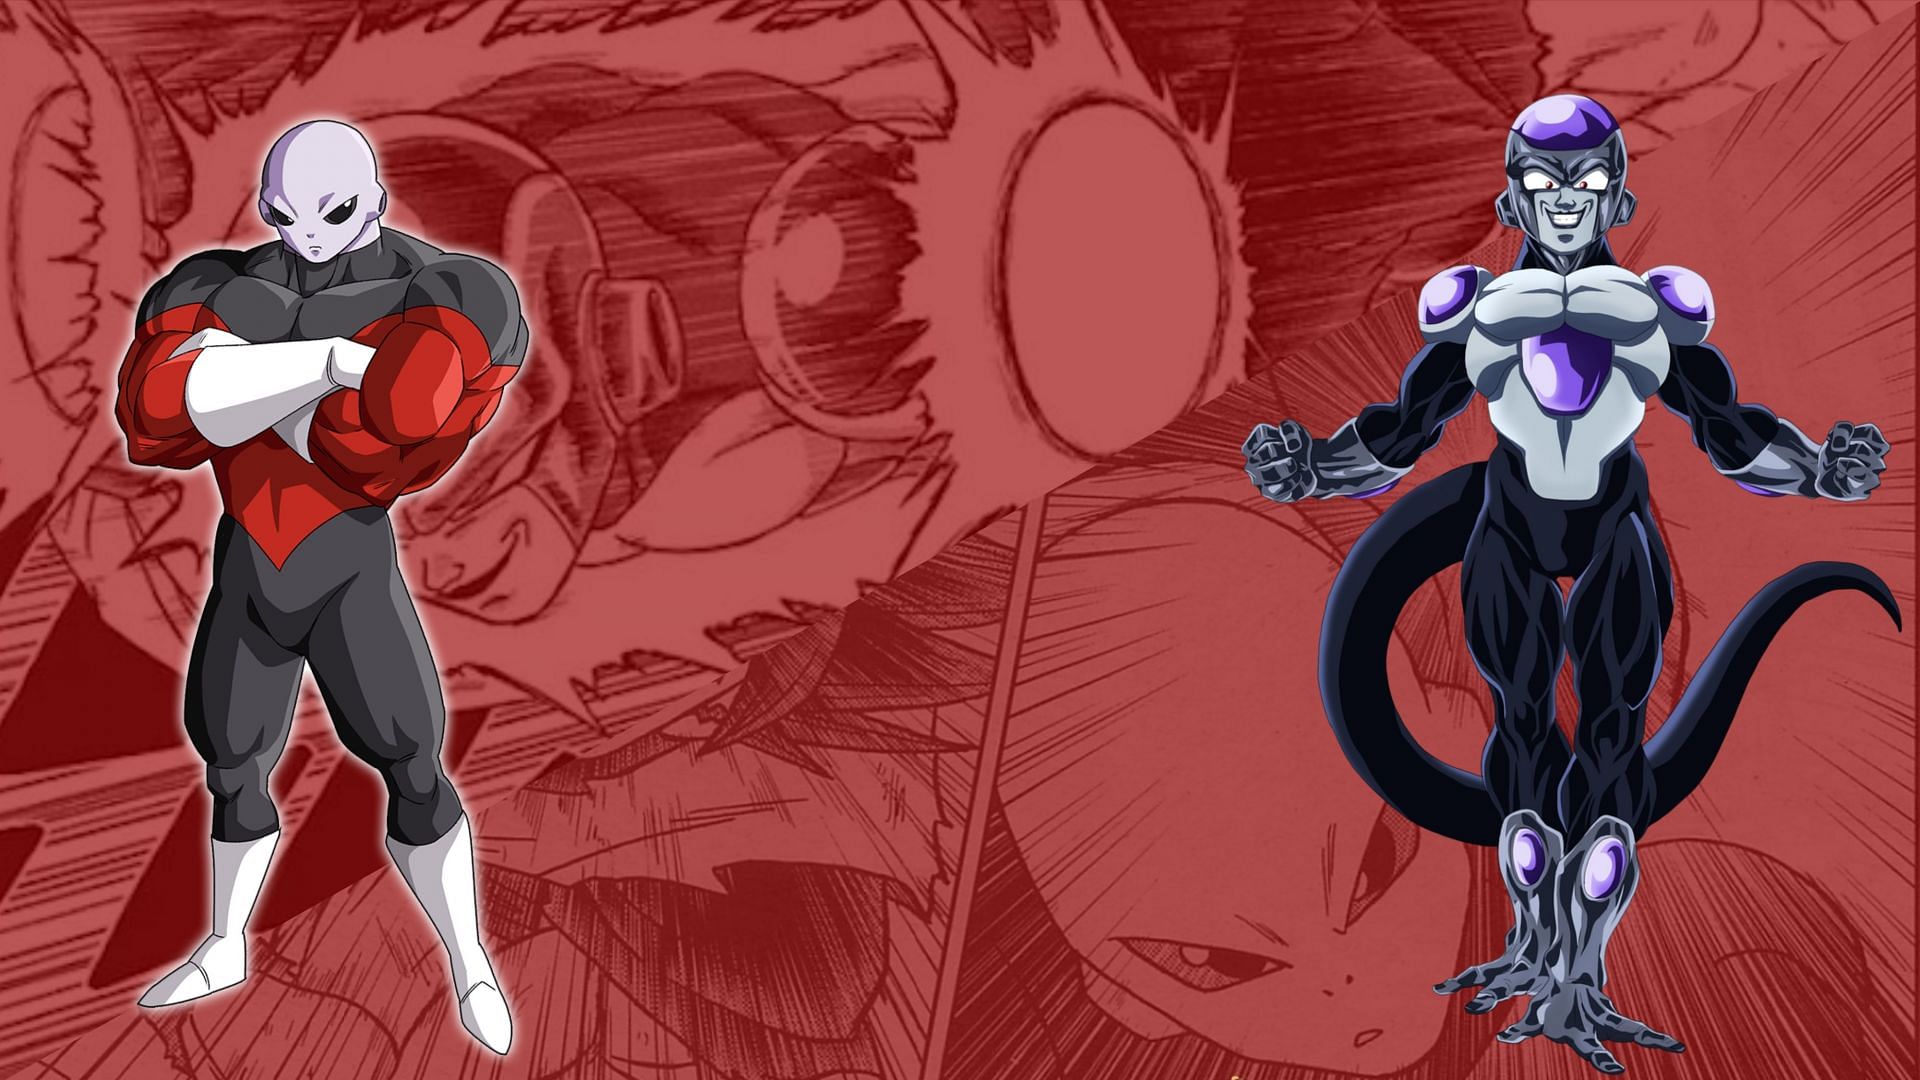 Jiren and Frieza, two of the most powerful beings in Dragon Ball (Image via Akira Toriyama/Shueisha)